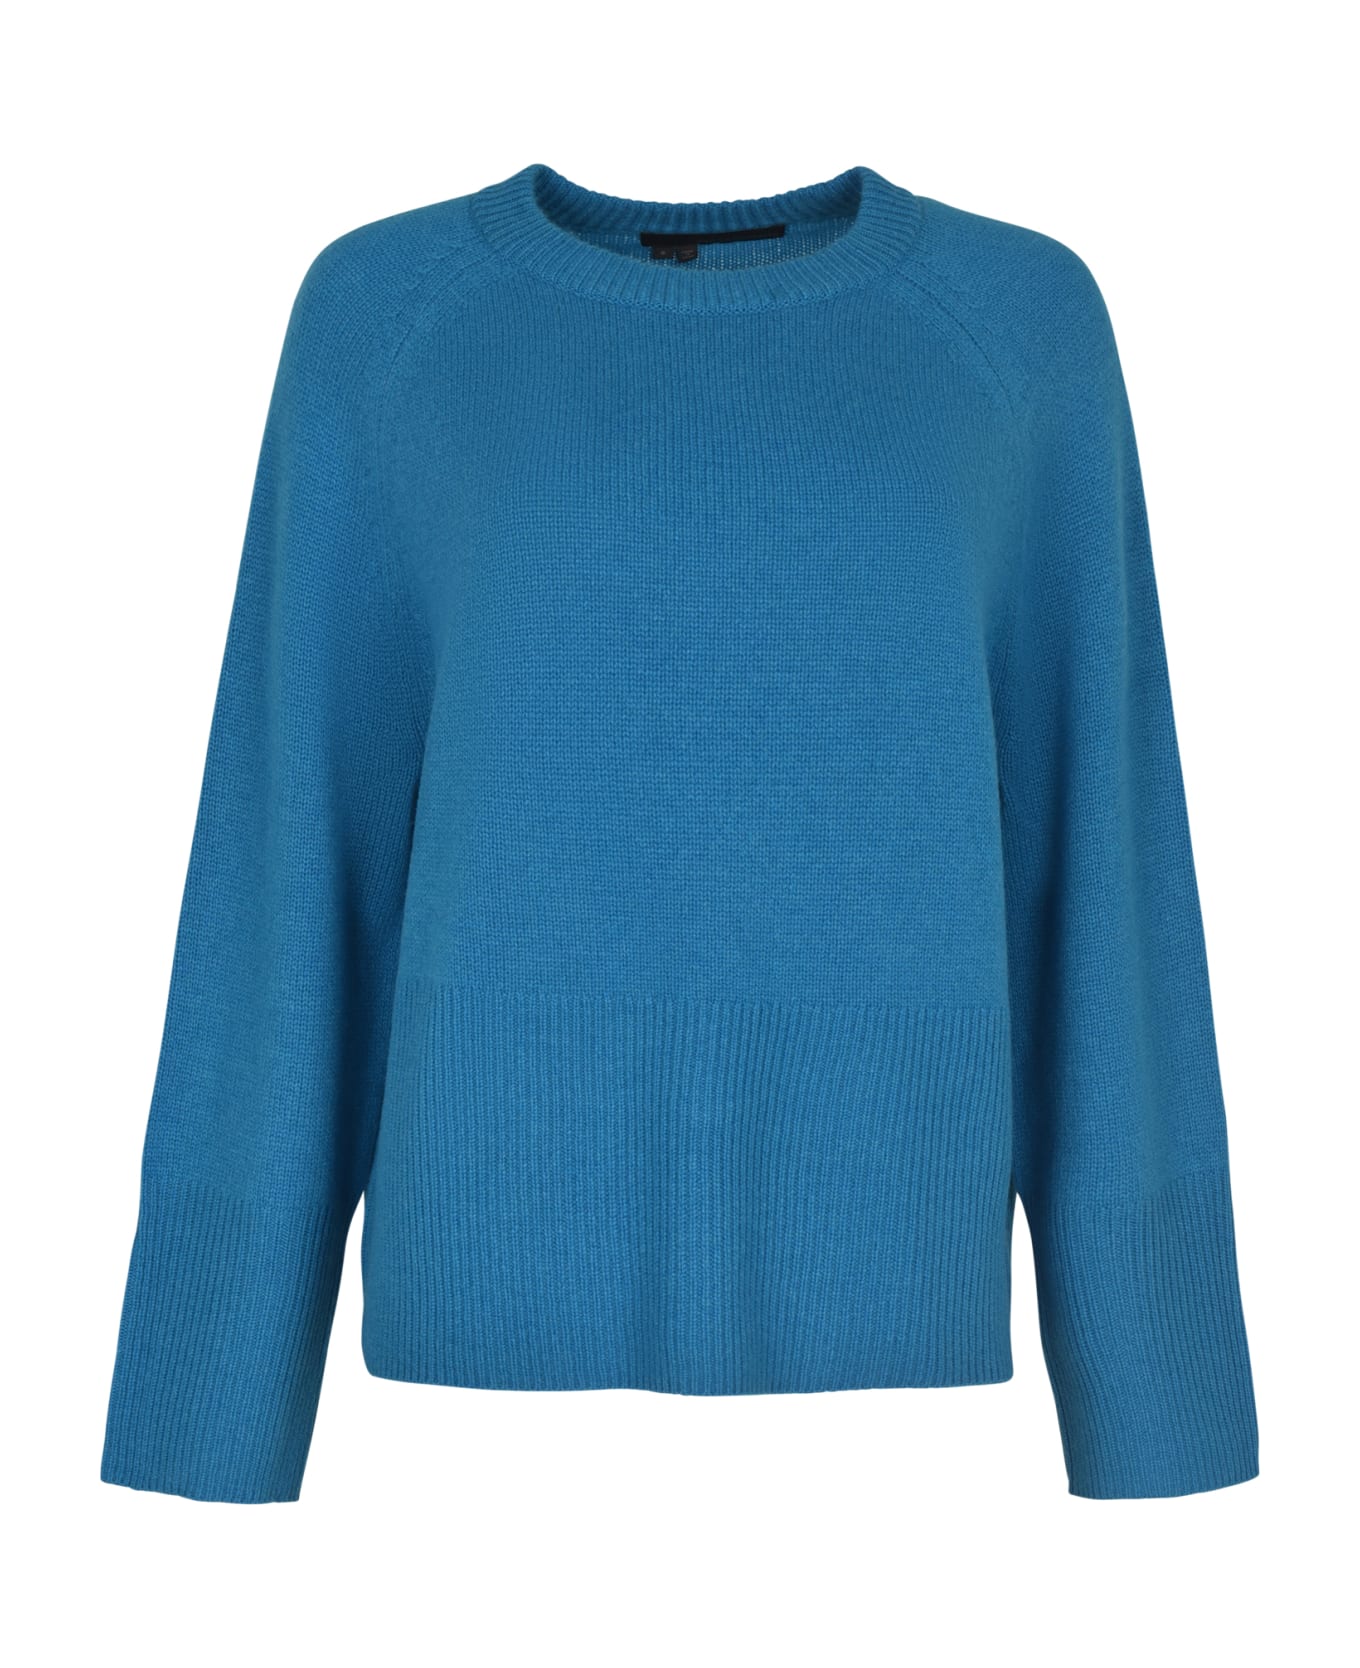 360Cashmere Rib Knit Sweater - Turquoise